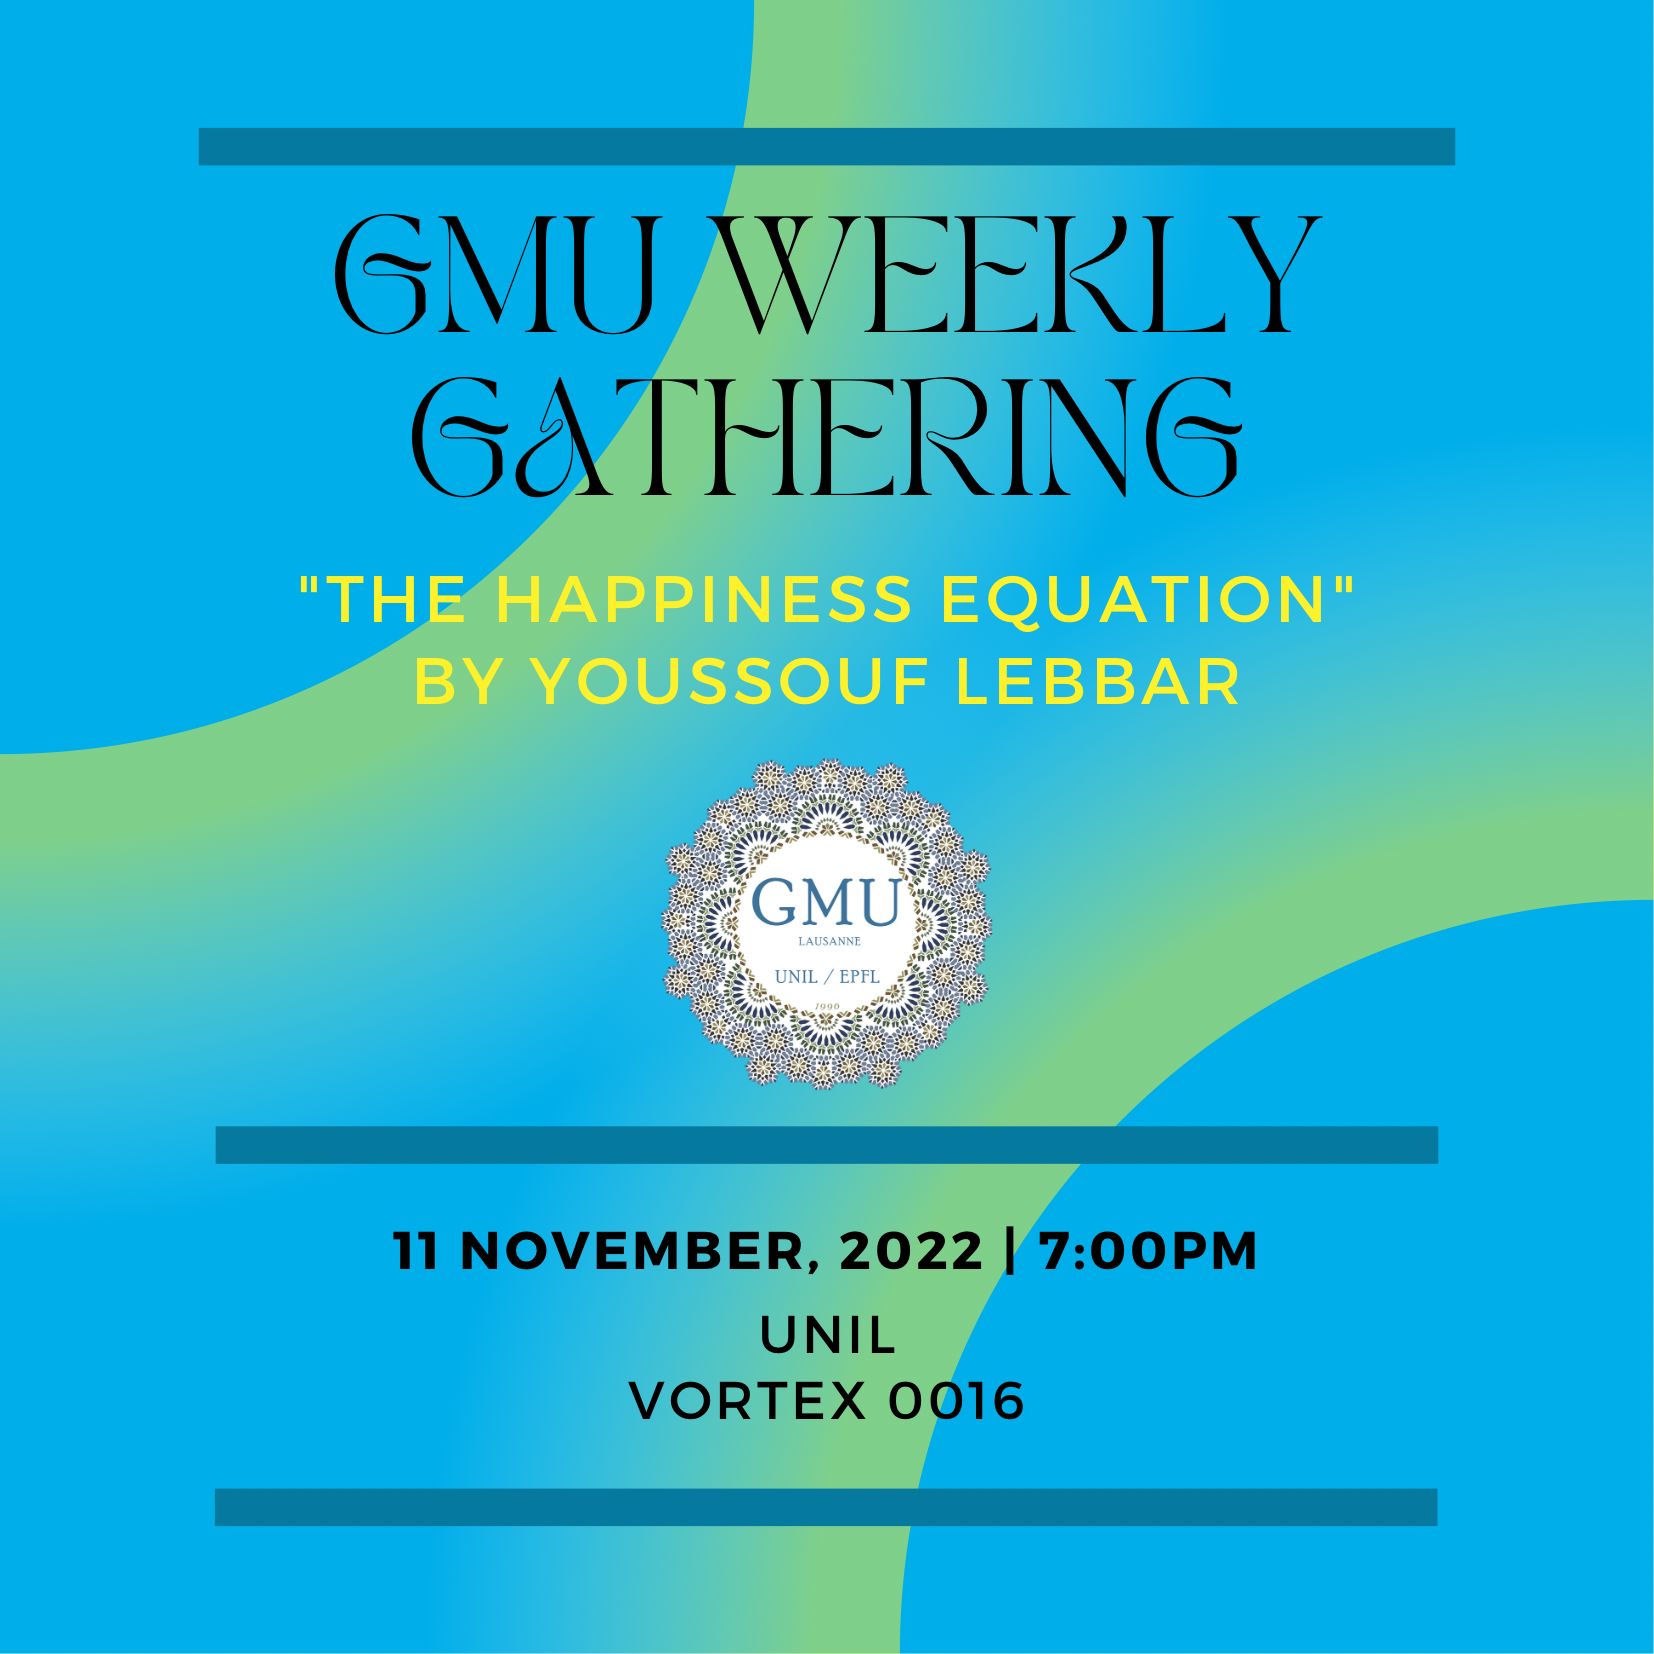 GMU Weekly Gathering